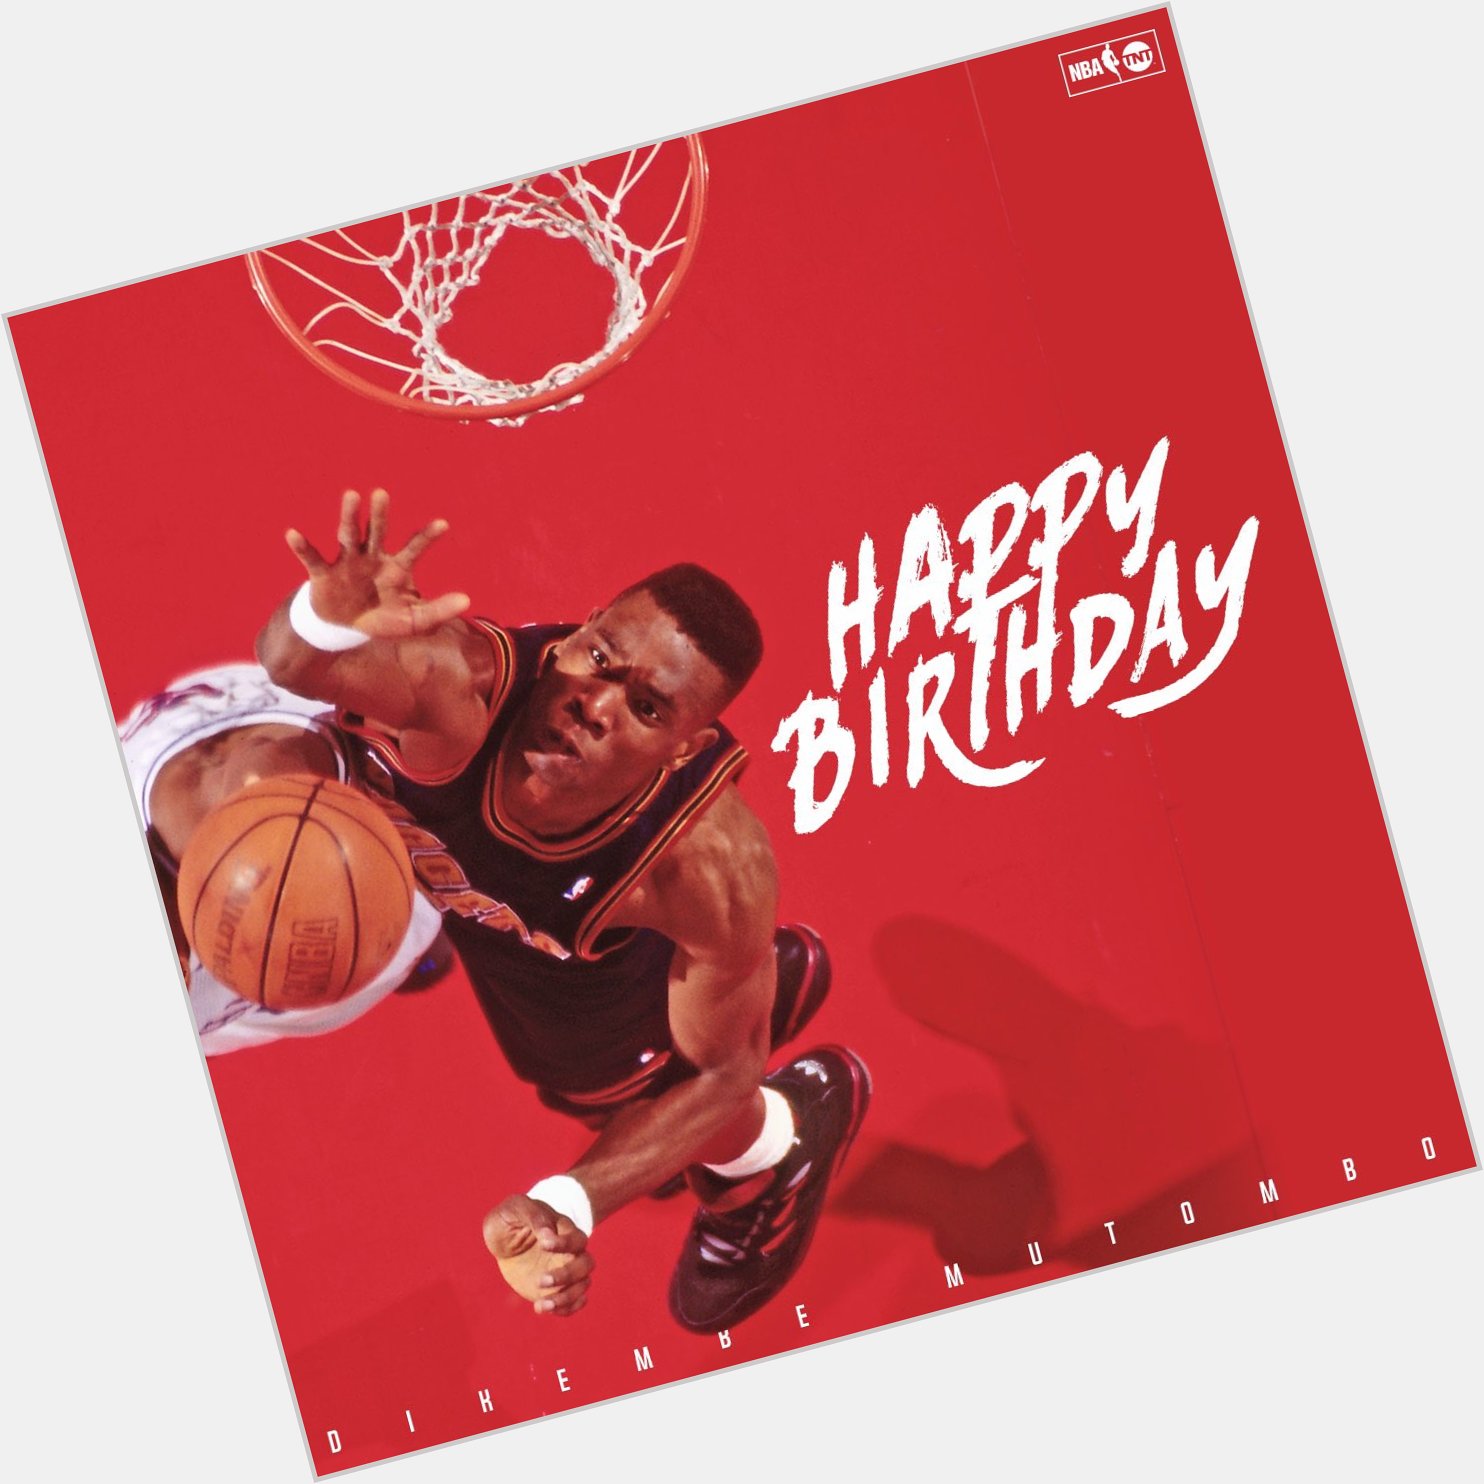  to help wish the No. 2 leading blocker in NBA history, Dikembe Mutombo a Happy Birthday!  